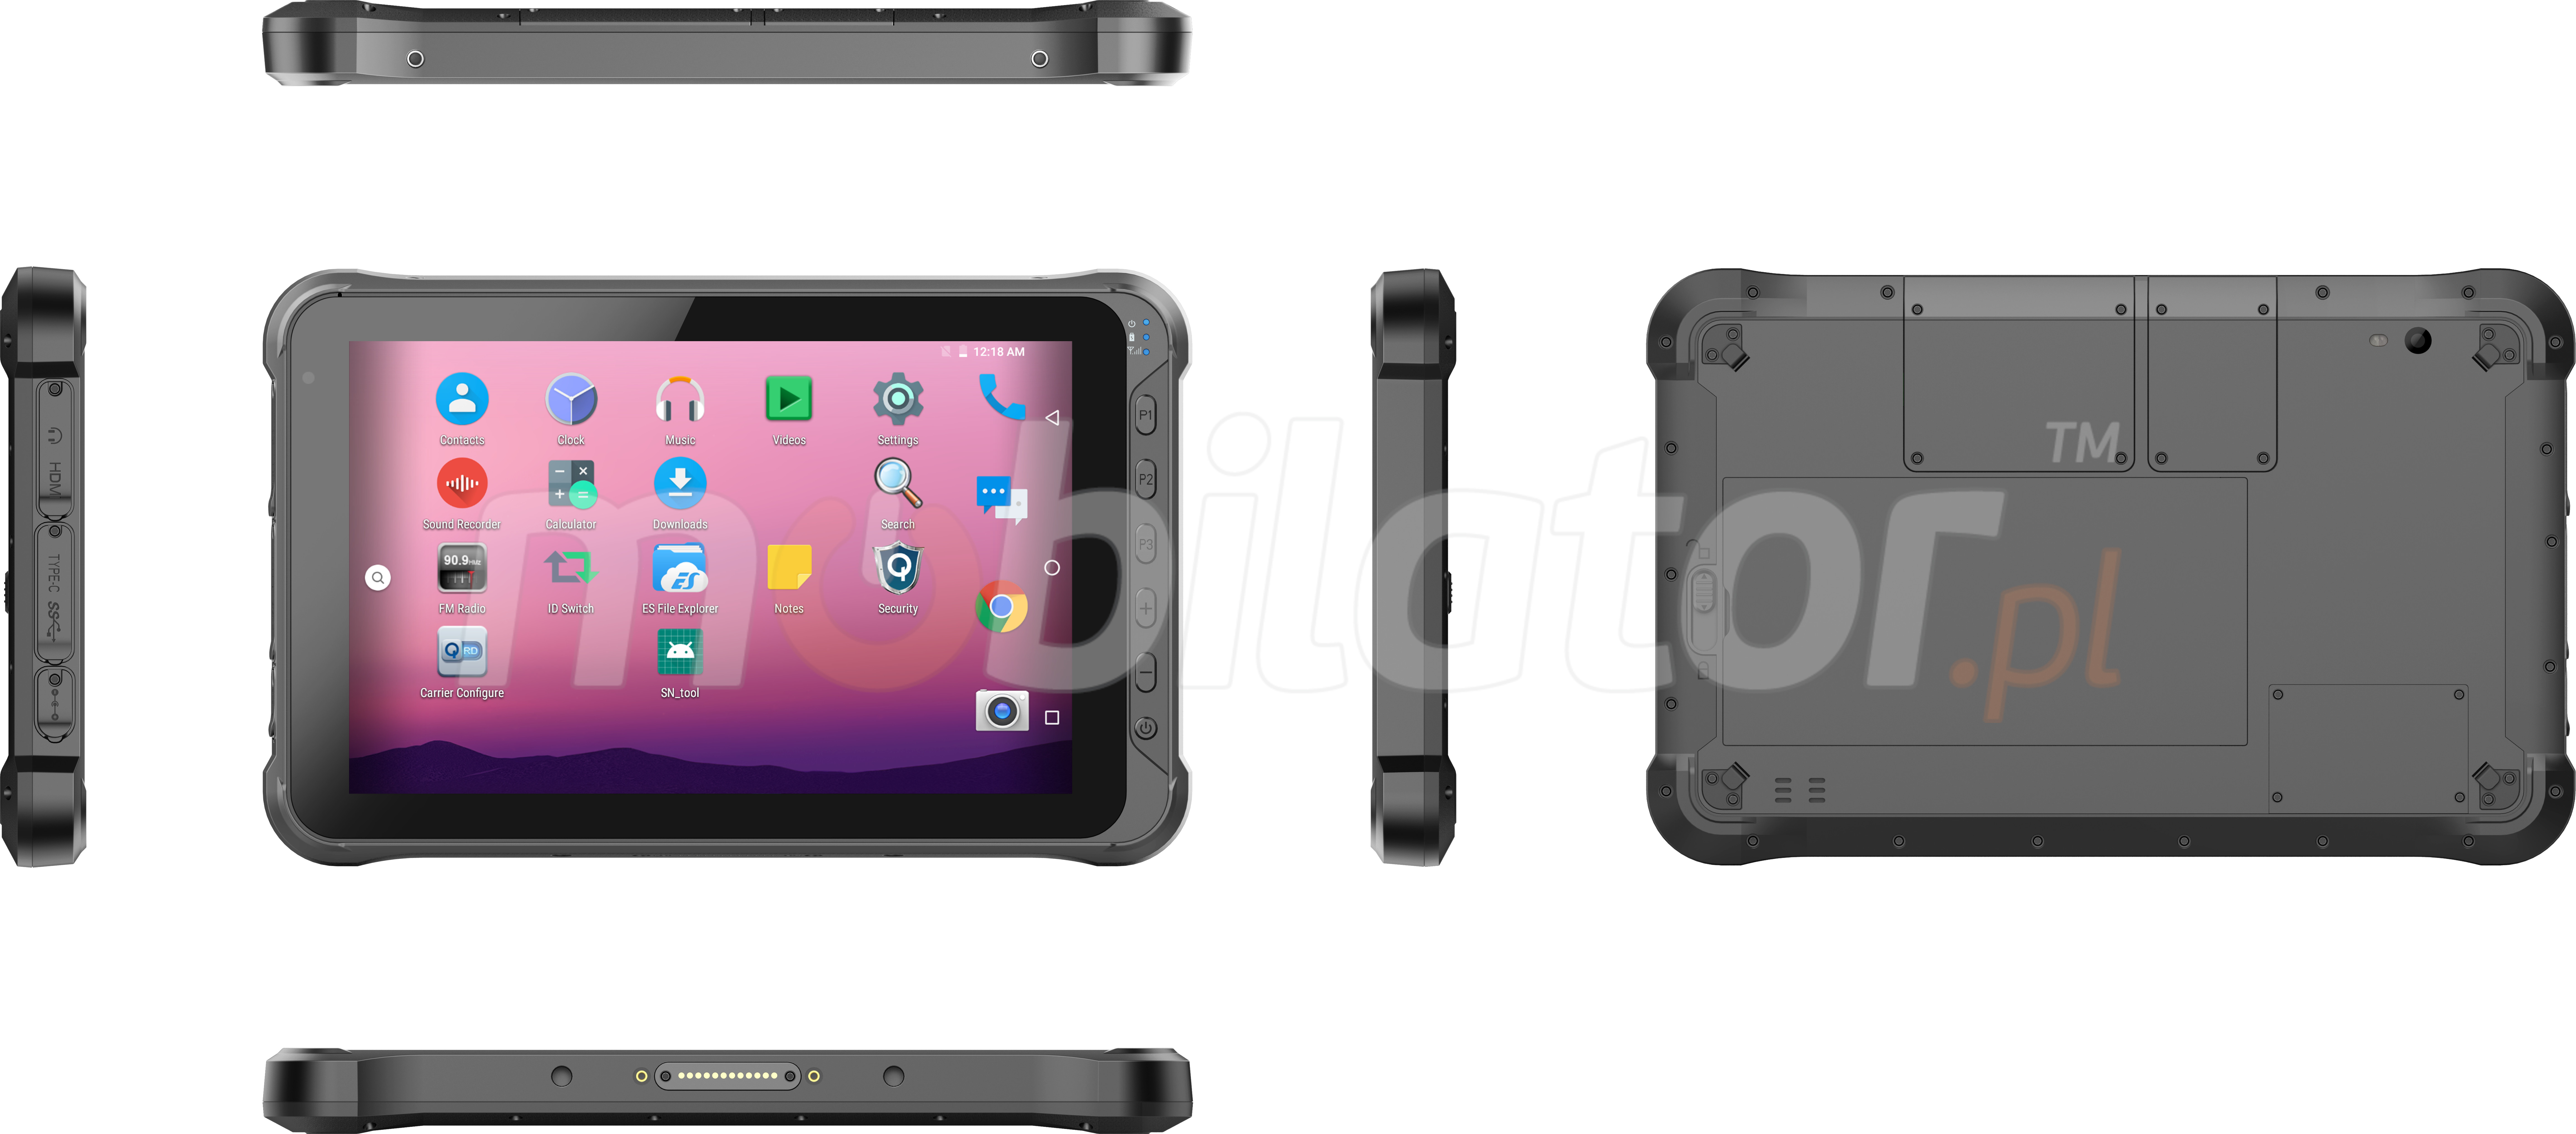 Dustproof 10-inch tablet with 1D Honeywell barcode reader and UHF RFID, IP65 + MIL-STD-810G standards, 4GB RAM, 64GB ROM, BT4.1 - Emdoor Q15P v.6 